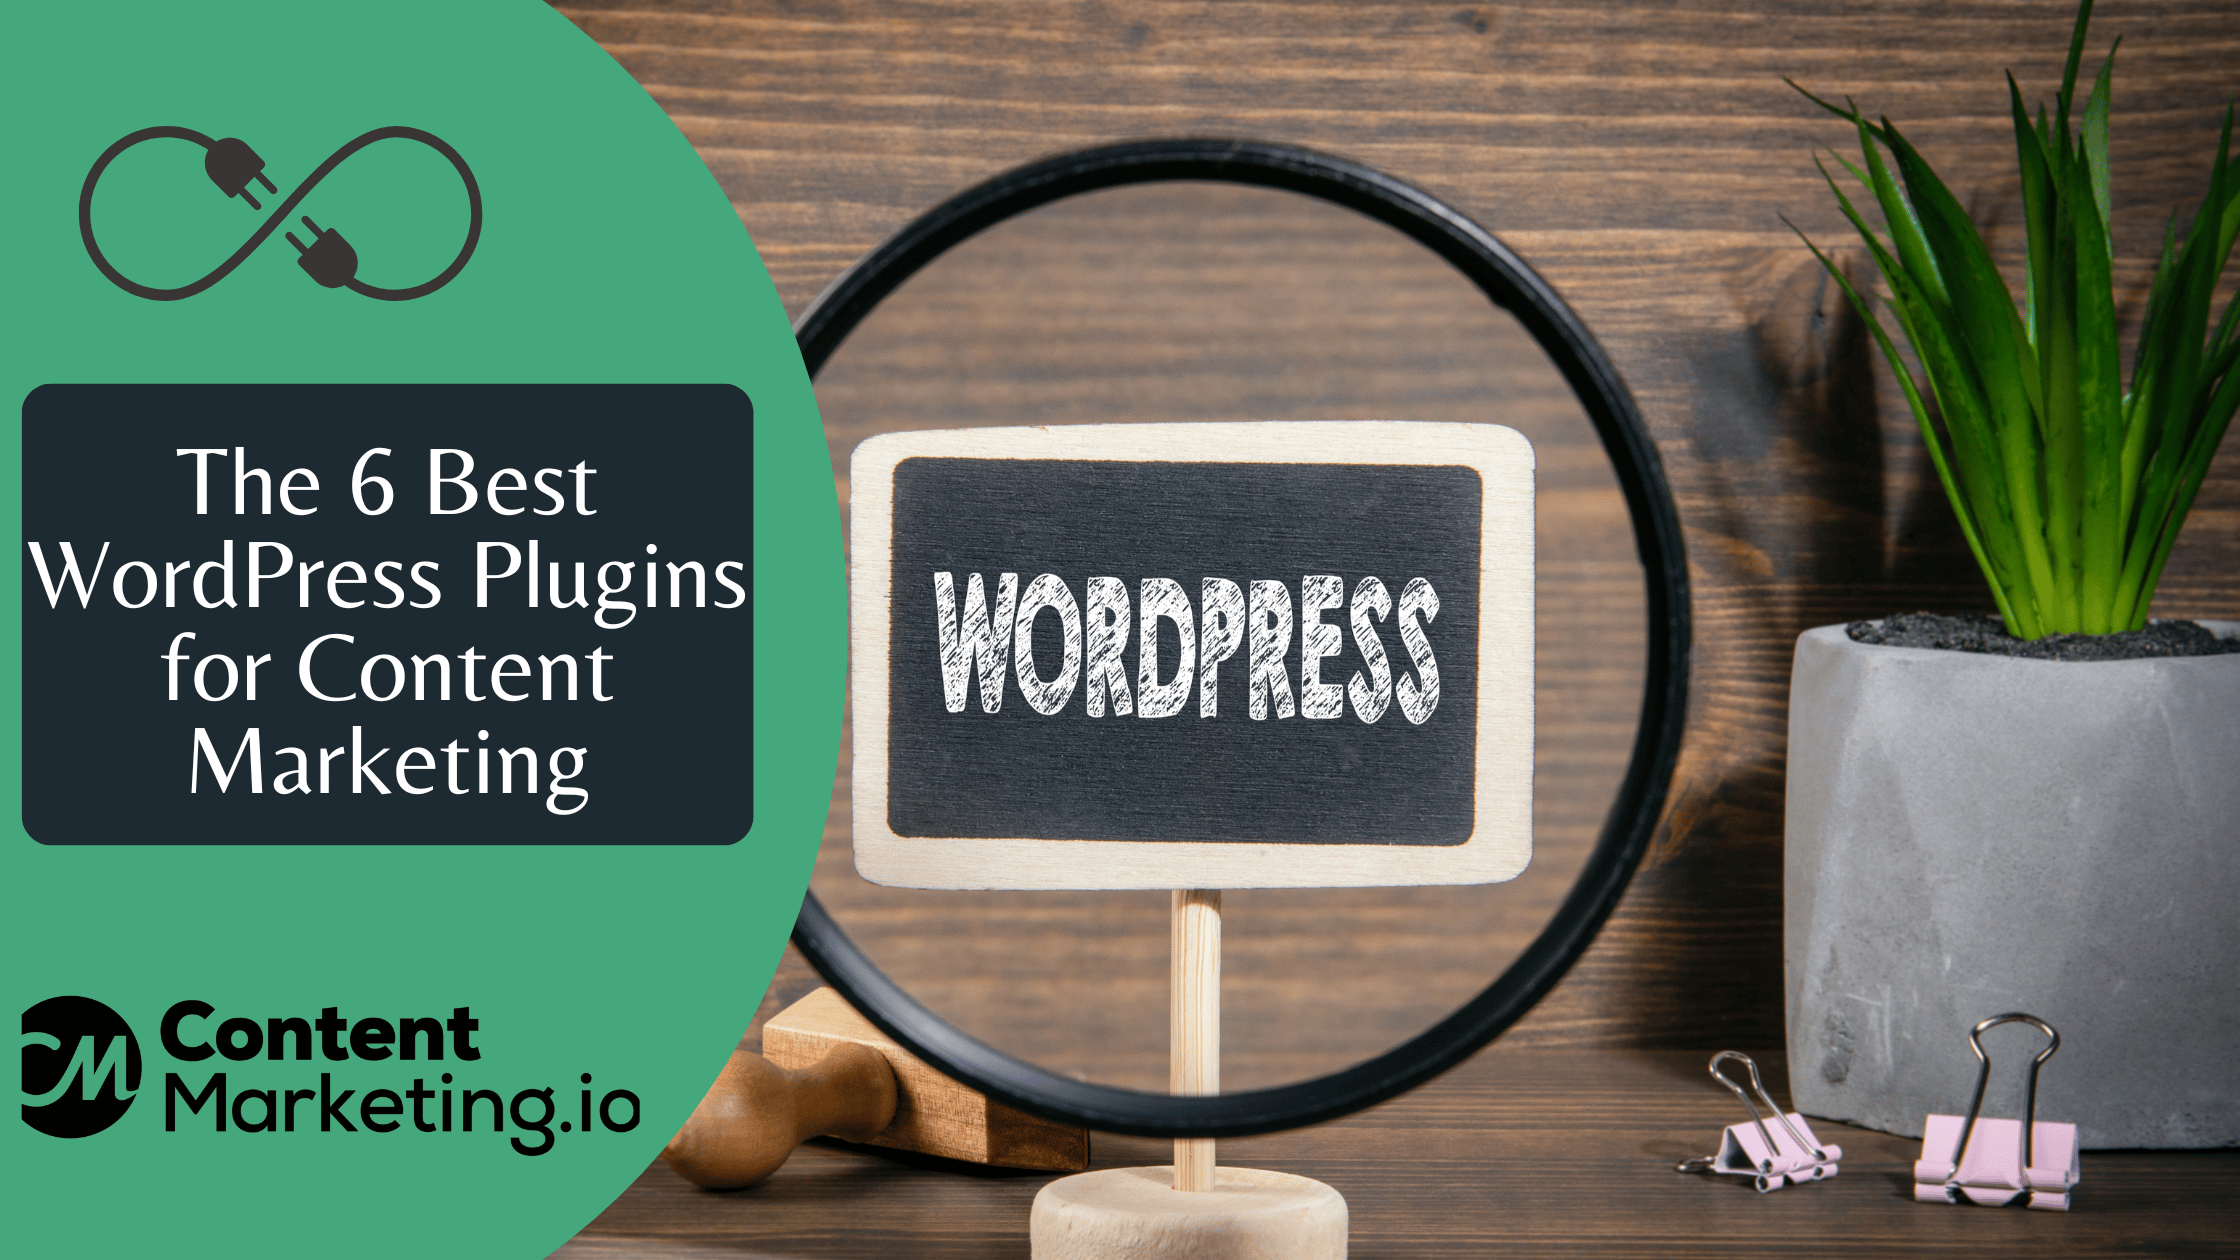 WordPress Plugins for Content Marketing